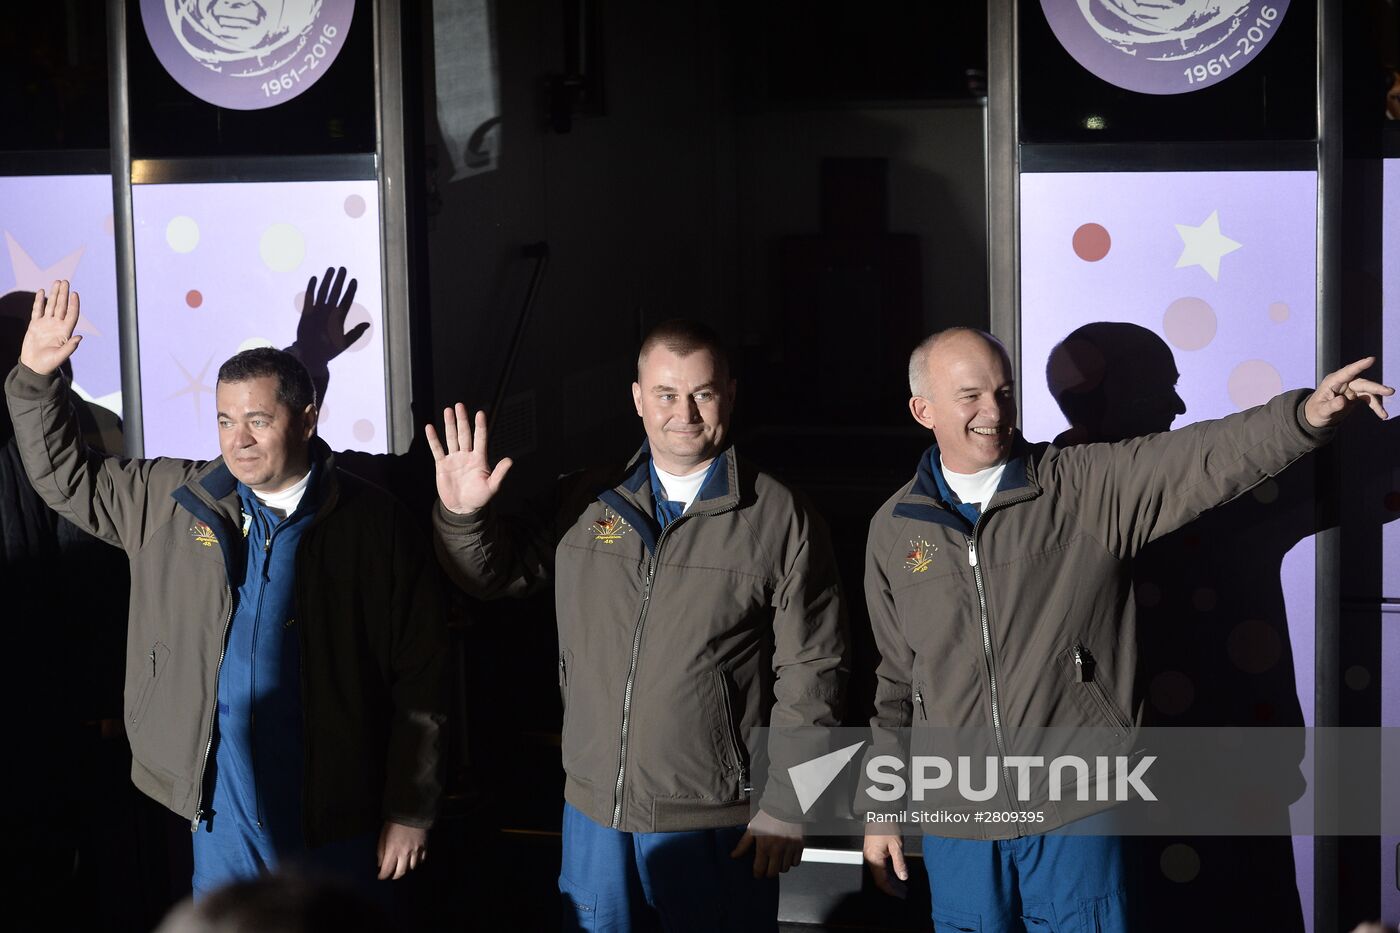 ISS Expedition 47/48 primary crew before blastoff